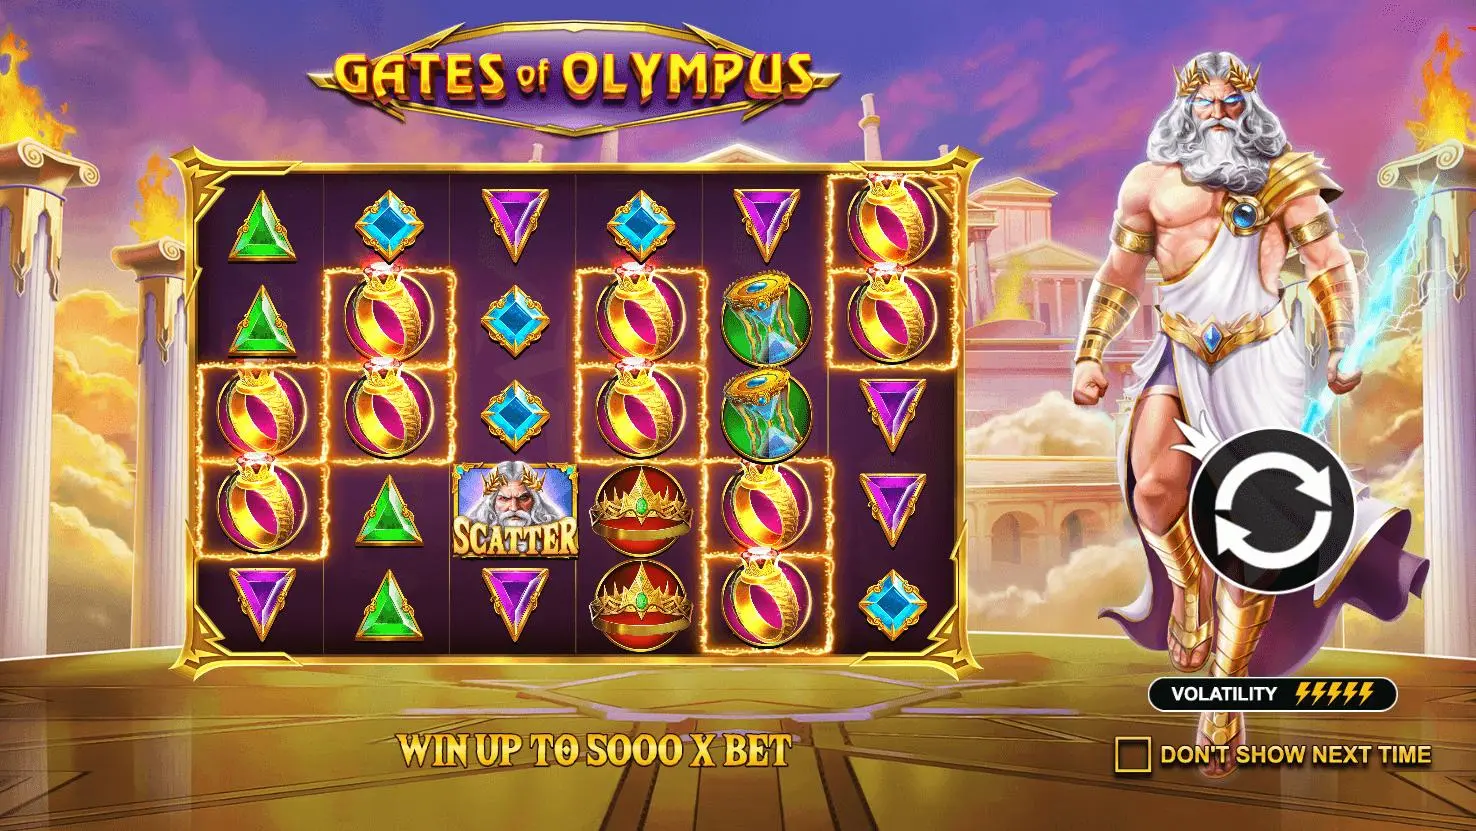 Olympus Slot